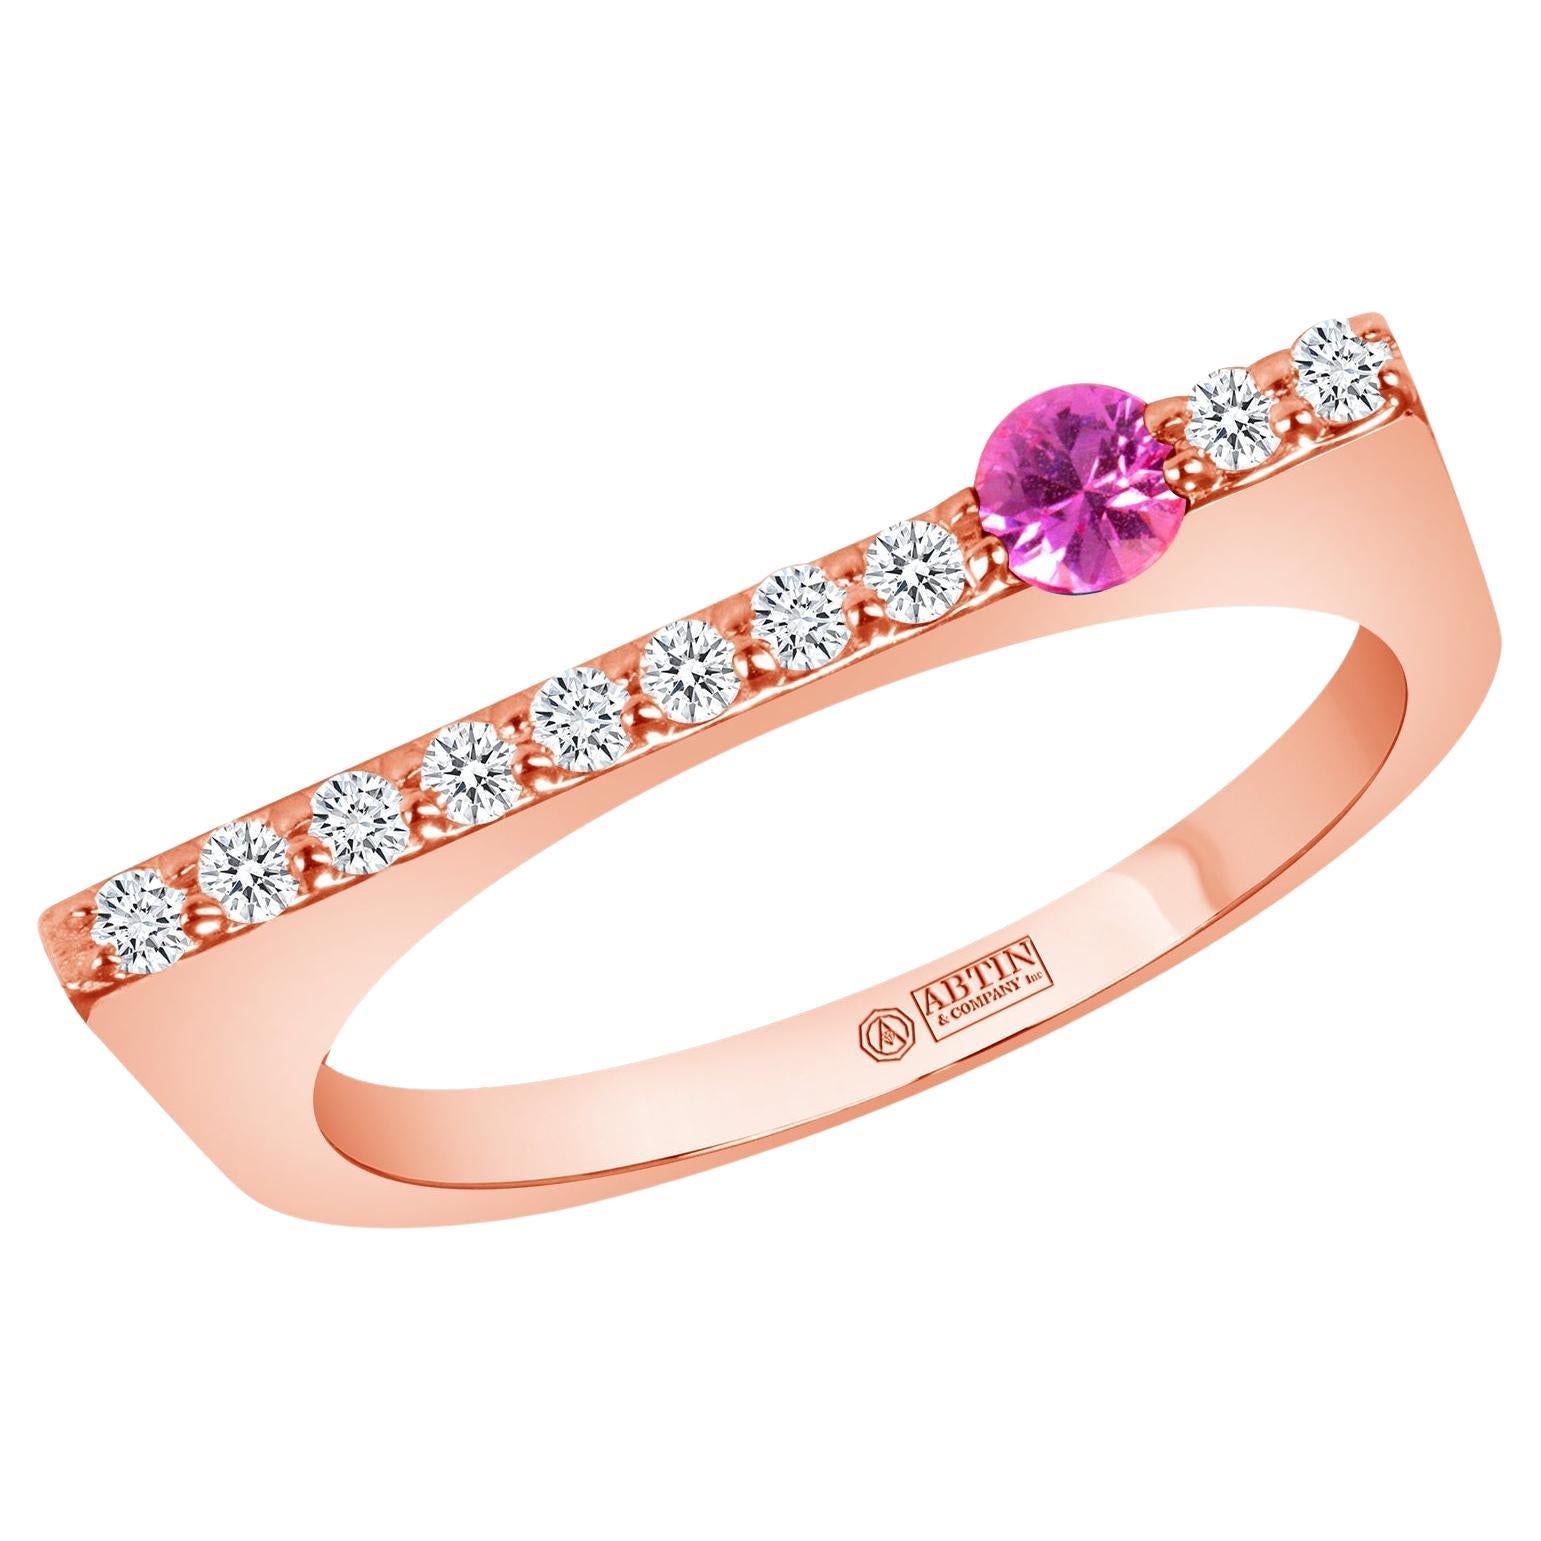 14K Rose Gold Modern Dainty Bar Diamond & Pink Sapphire Stackable Band Ring